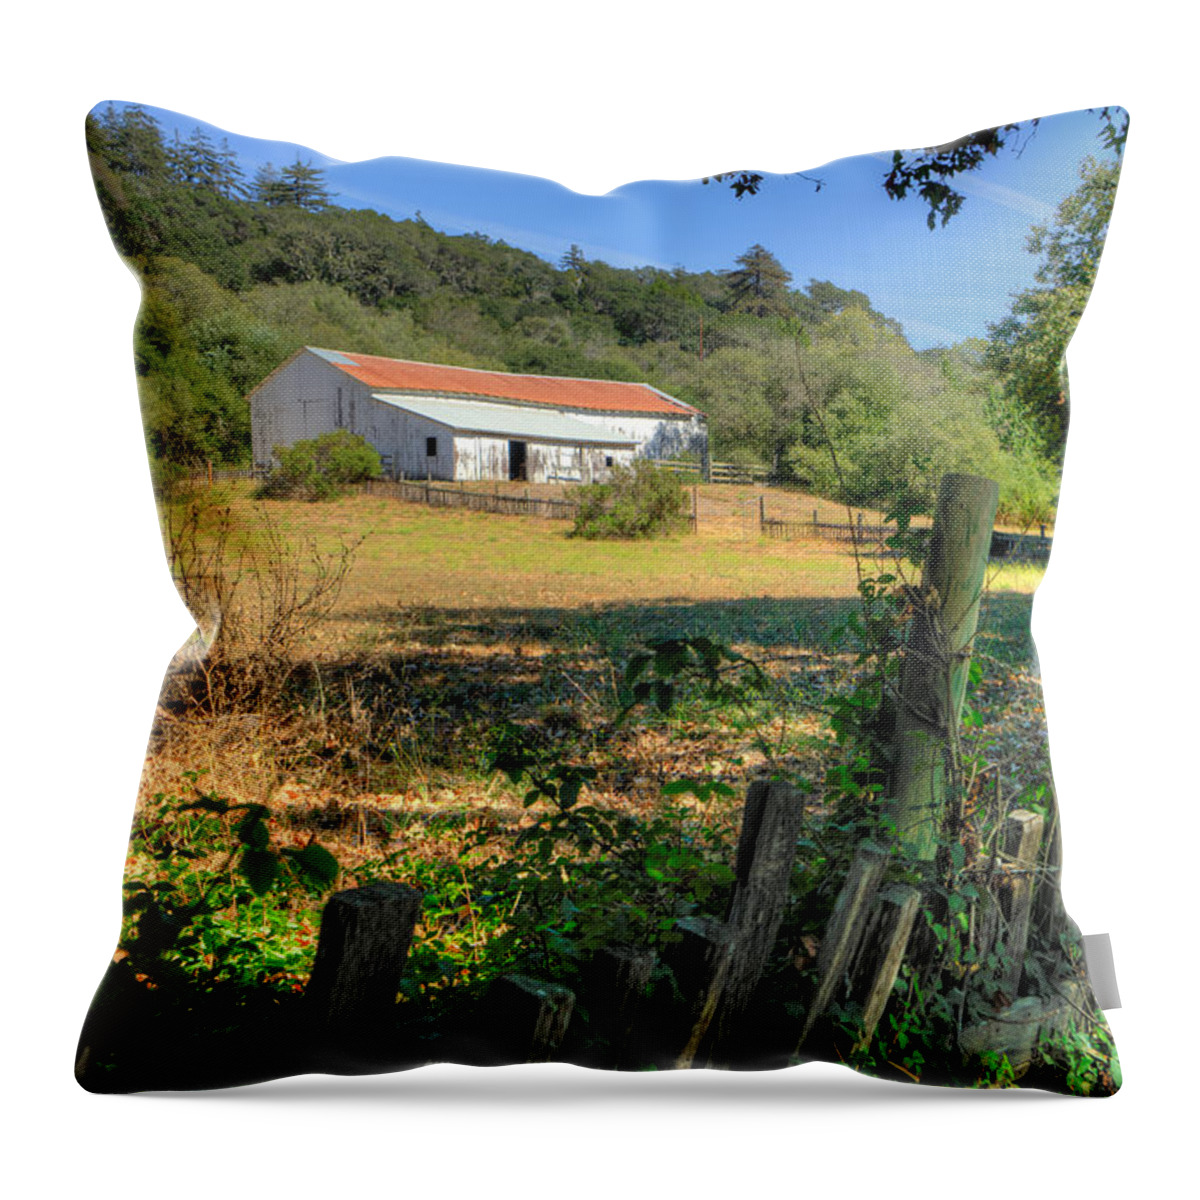 Big Sur Throw Pillow featuring the photograph Barn in Big Sur by Derek Dean